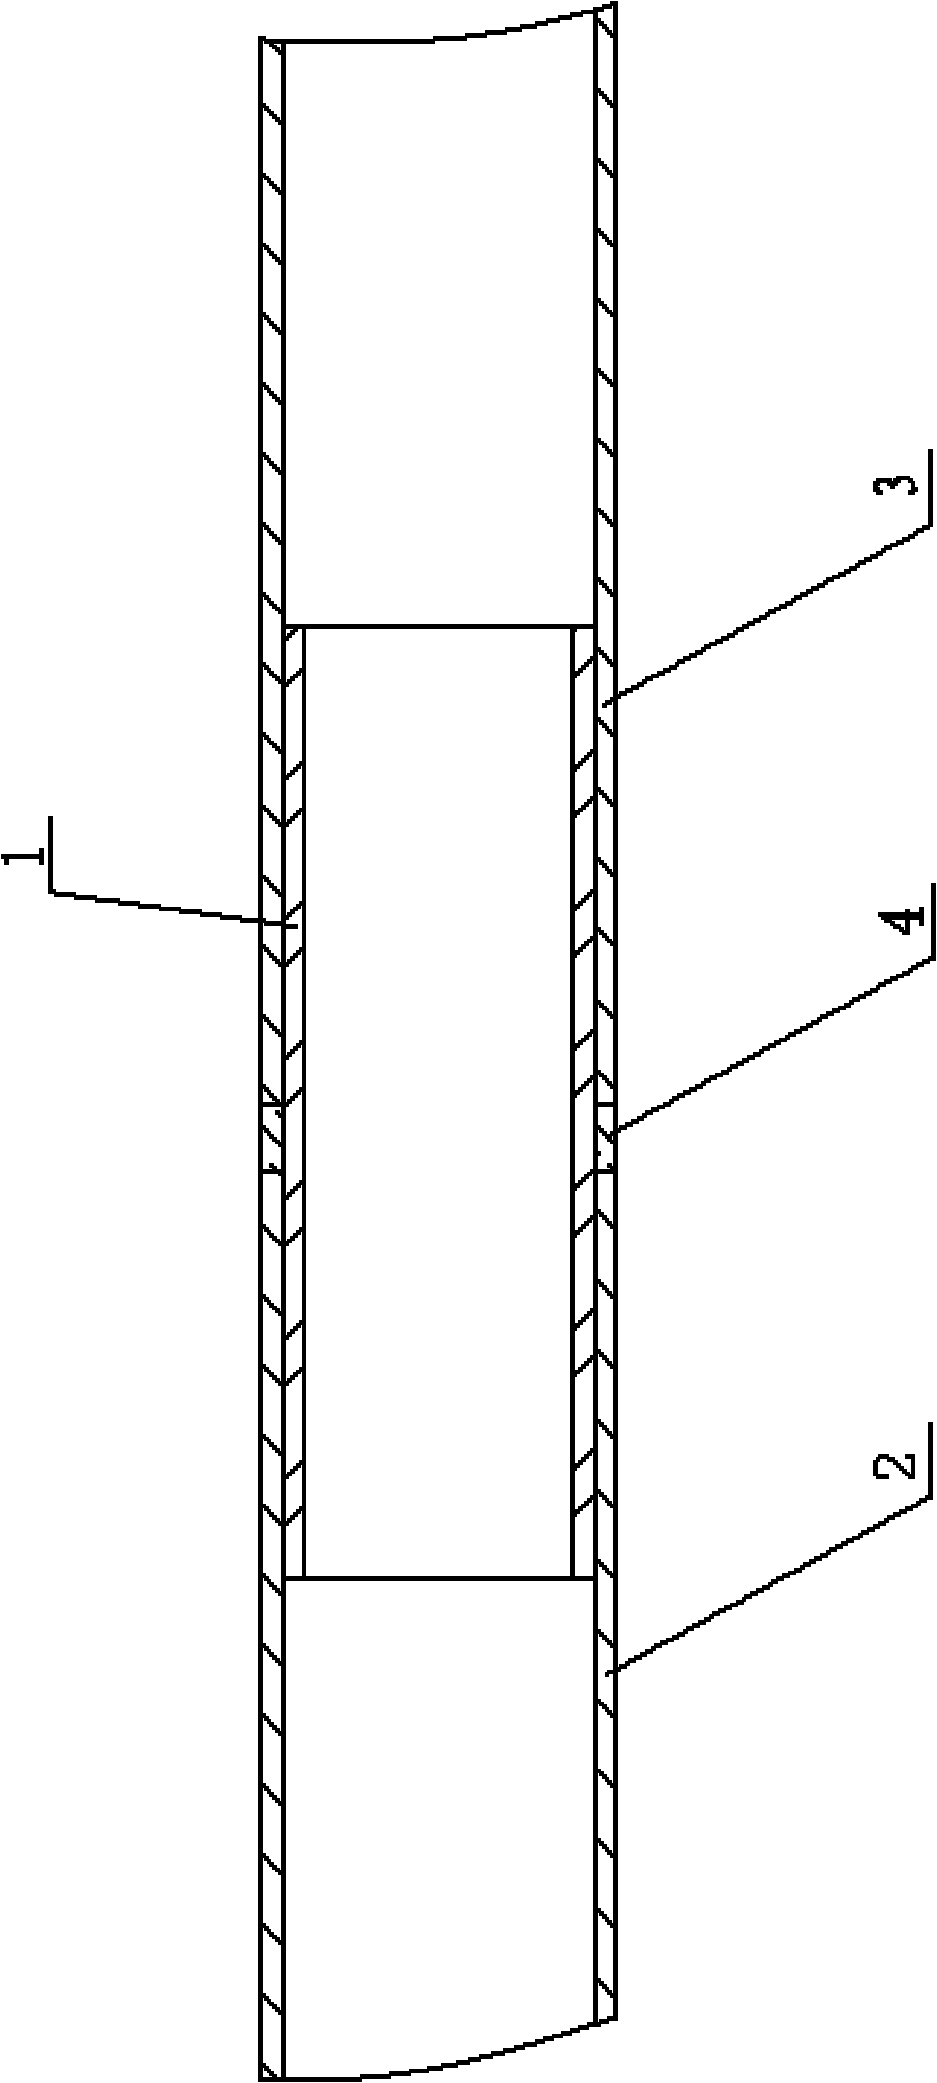 Thin walled tube welding method